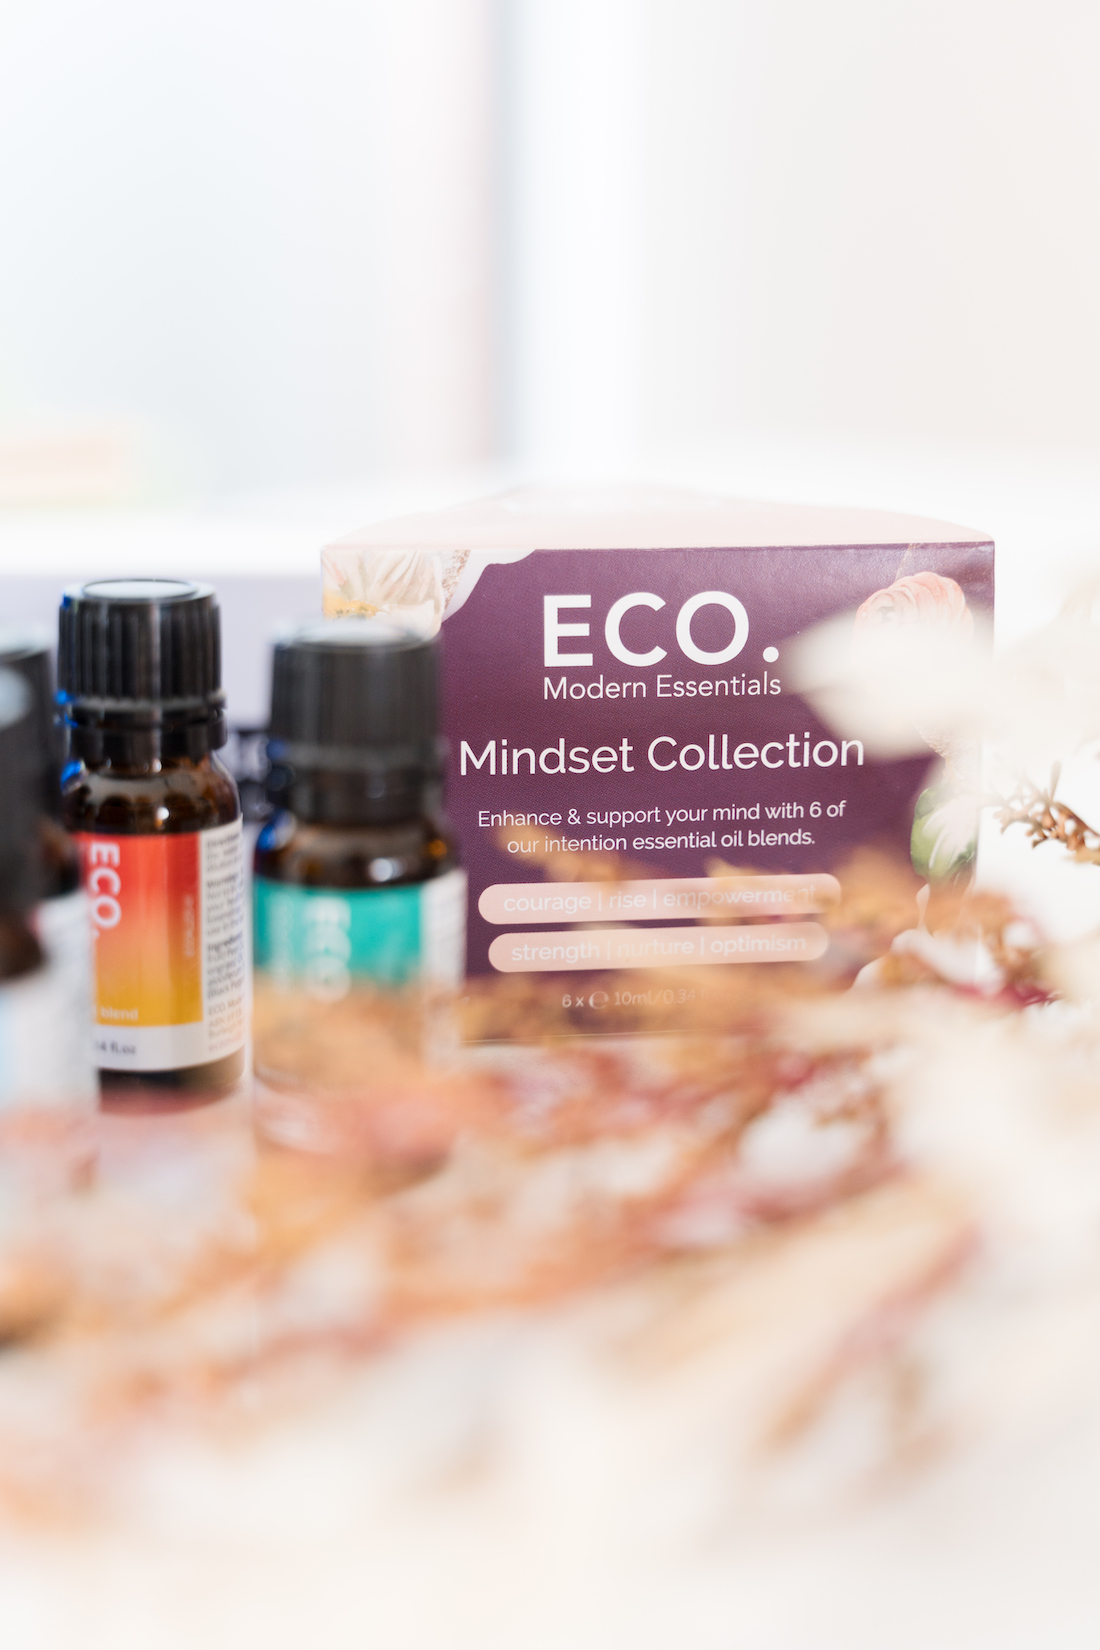 Eco Modern Essential oils mindset collection